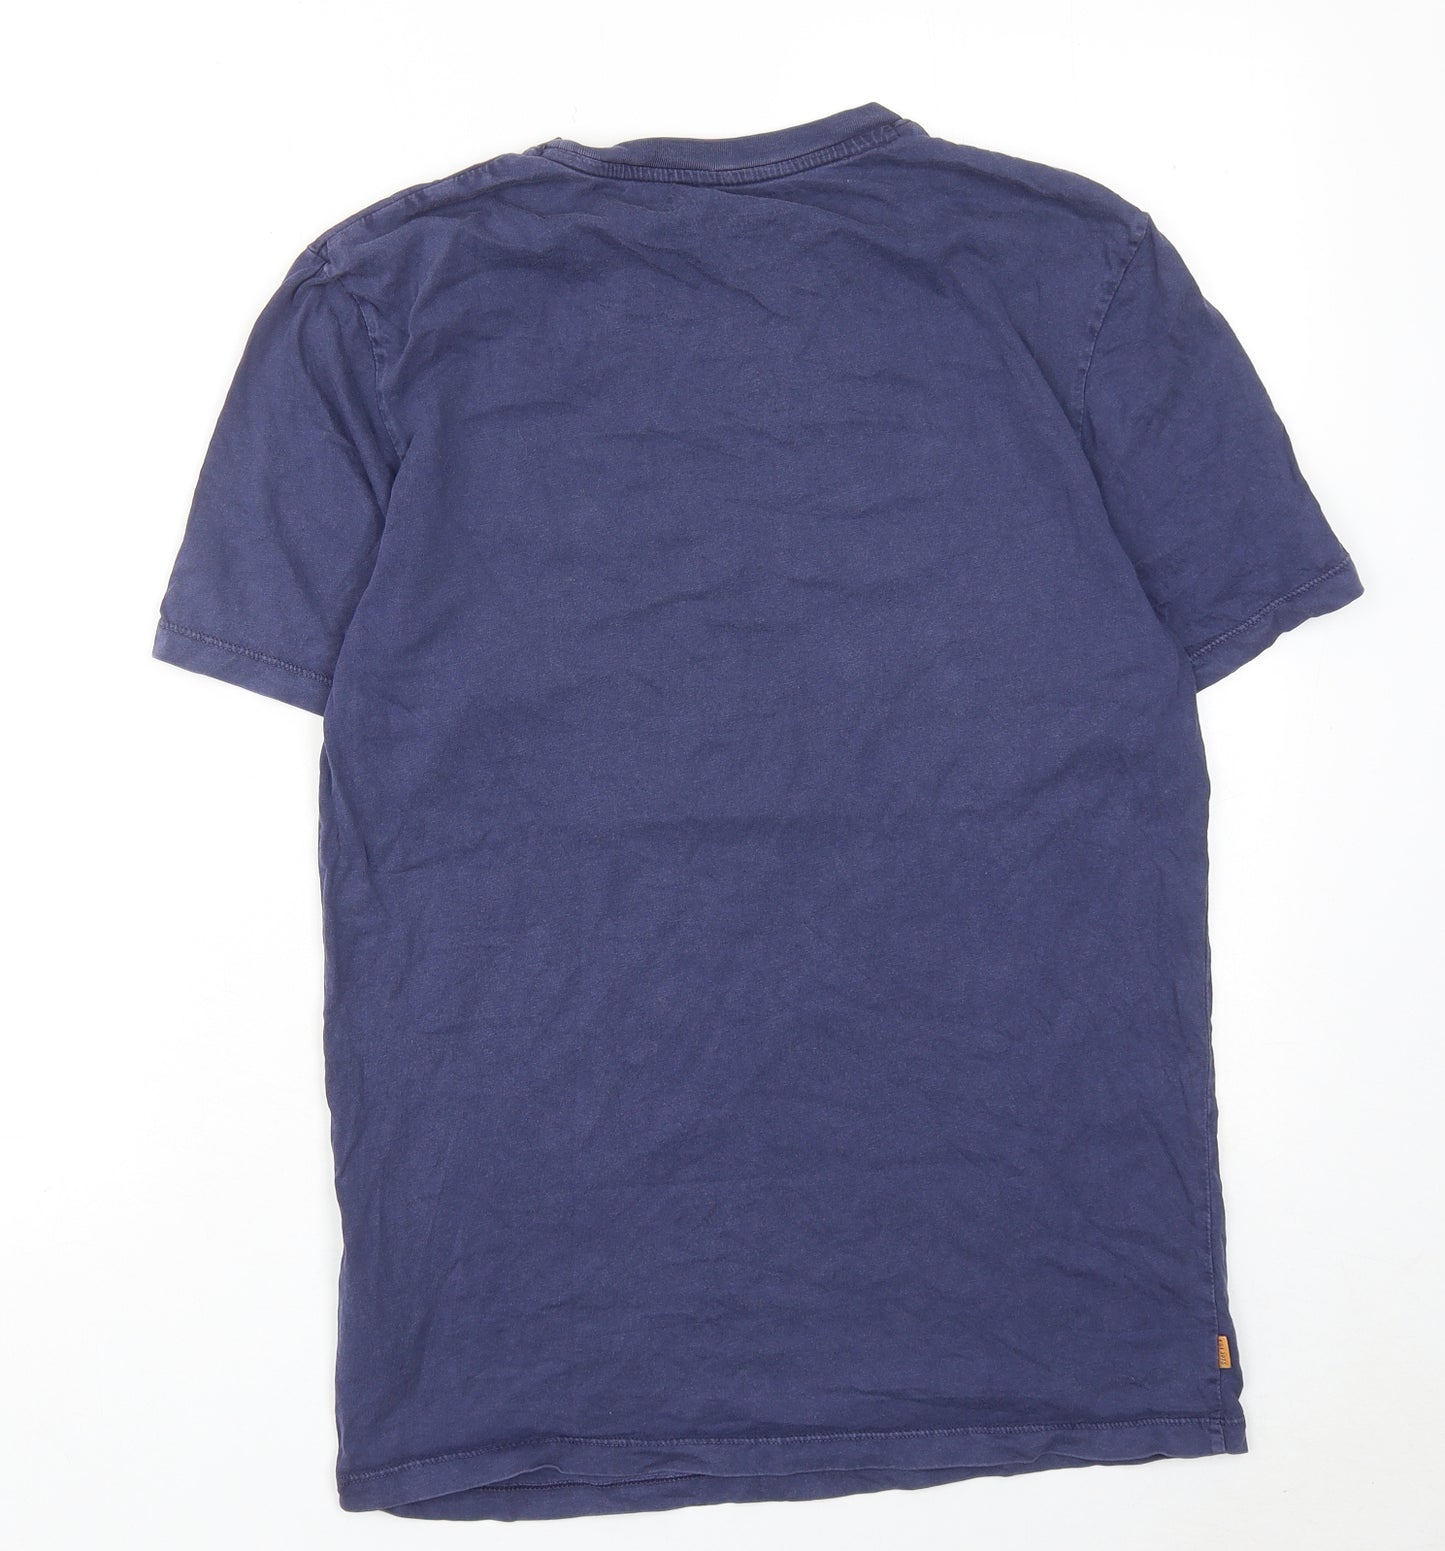 Timberland Mens Blue Cotton T-Shirt Size S Round Neck